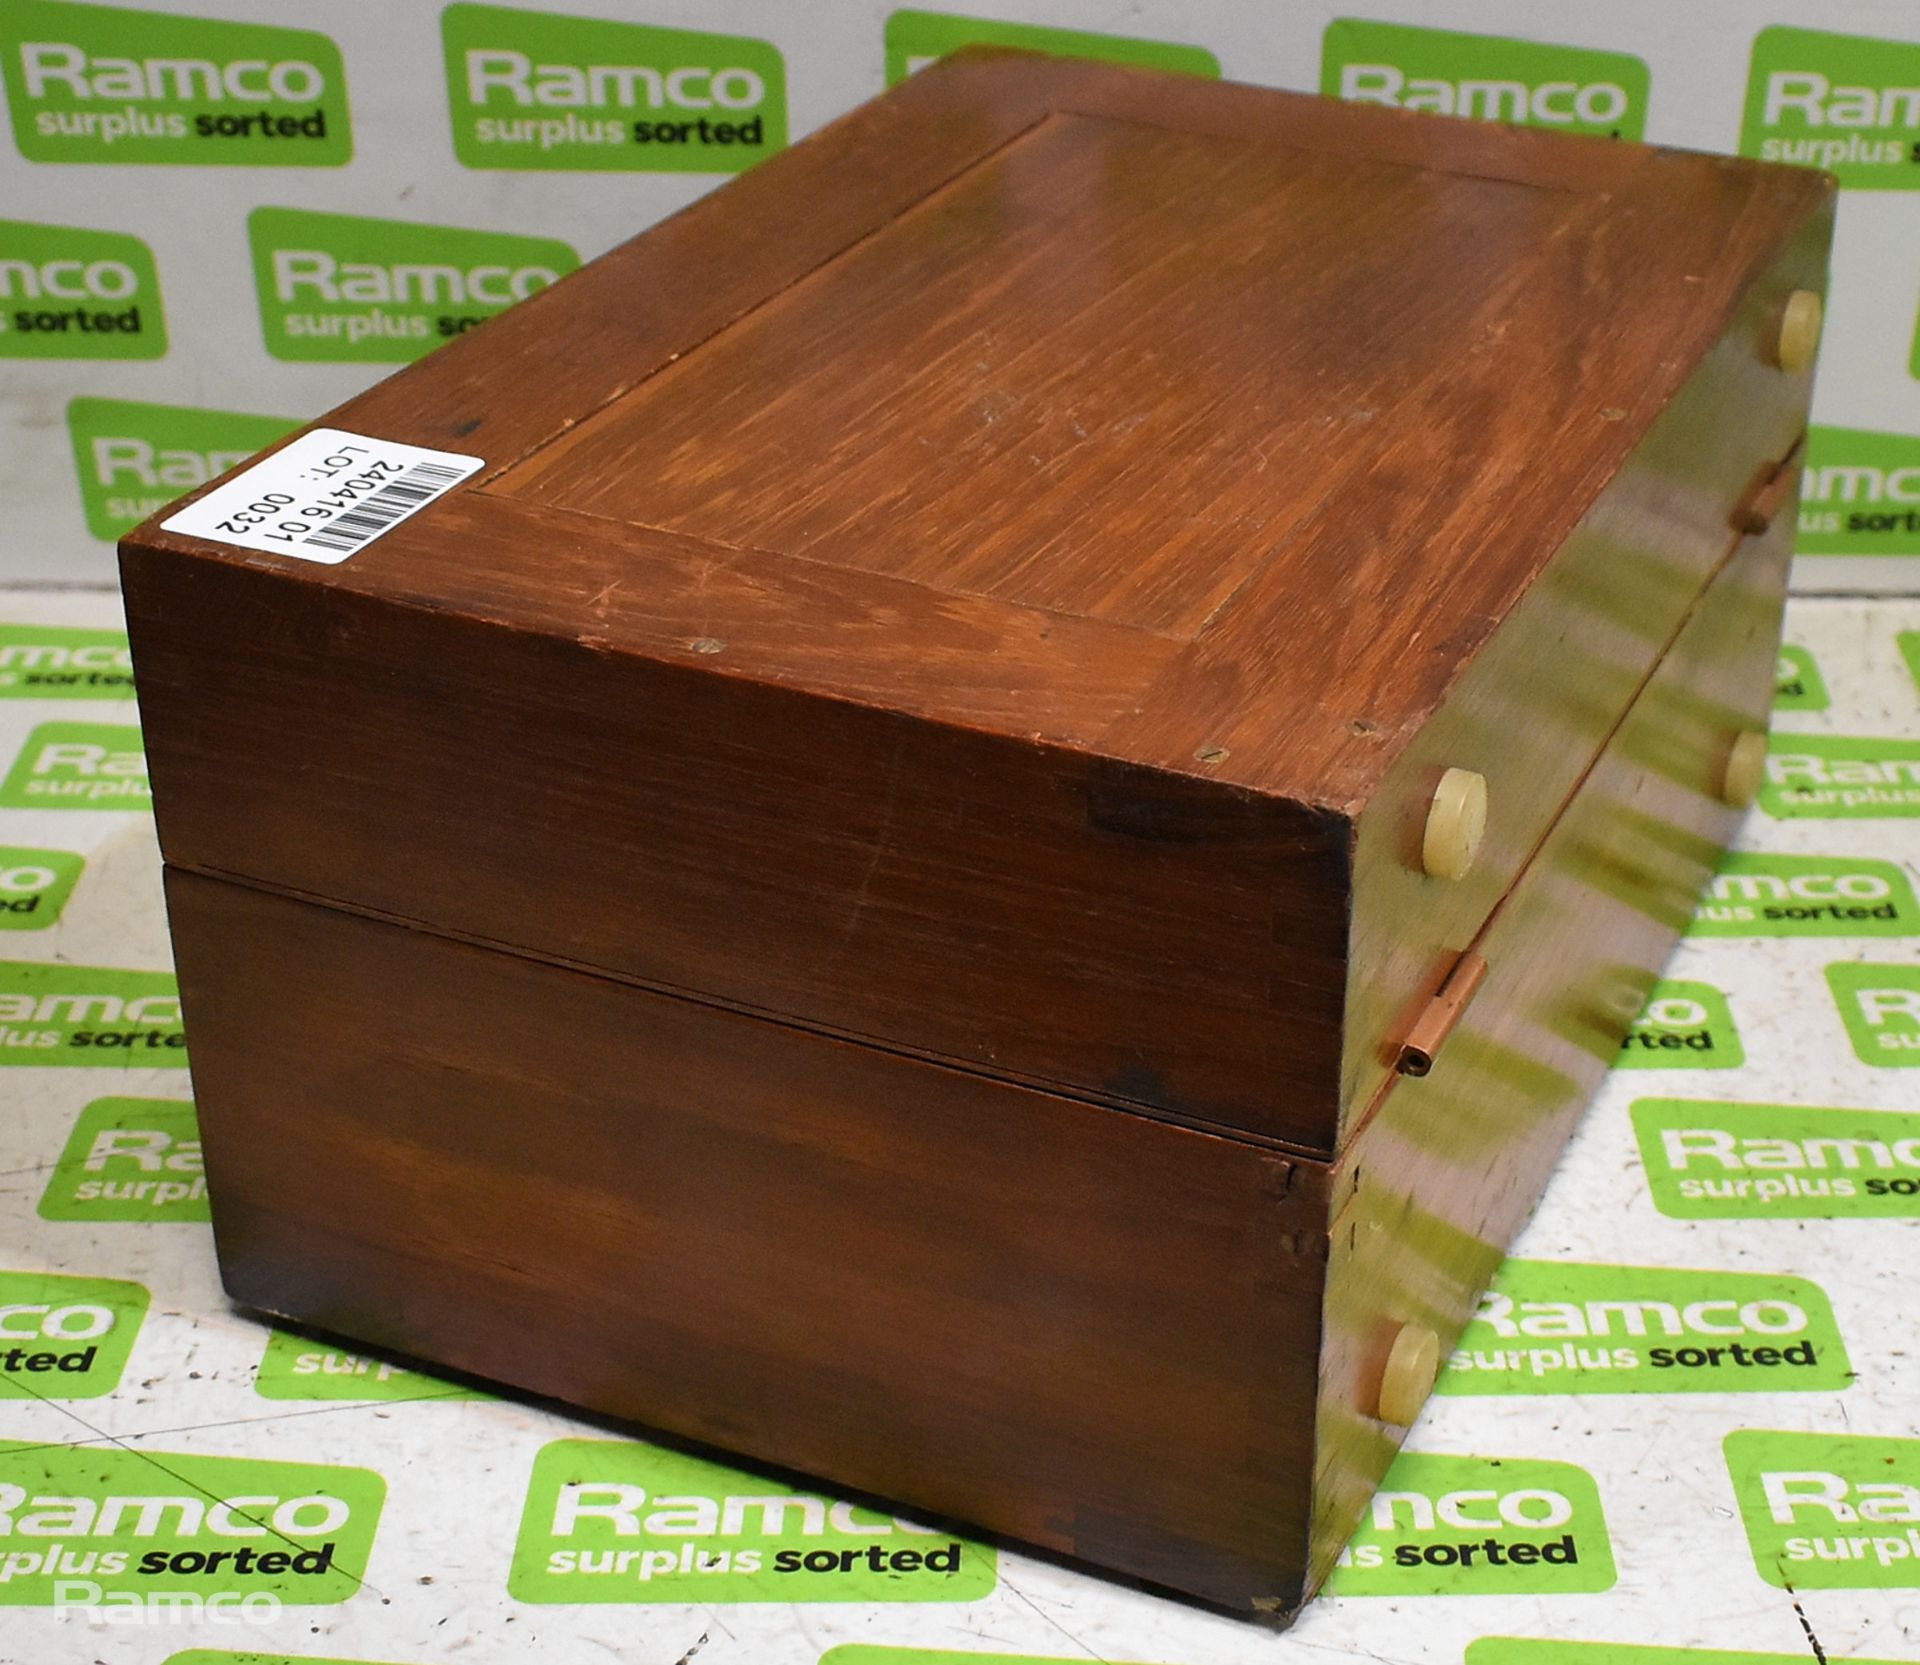 Cambridge Type 24488 portable potentiometer in wooden box - Image 6 of 11